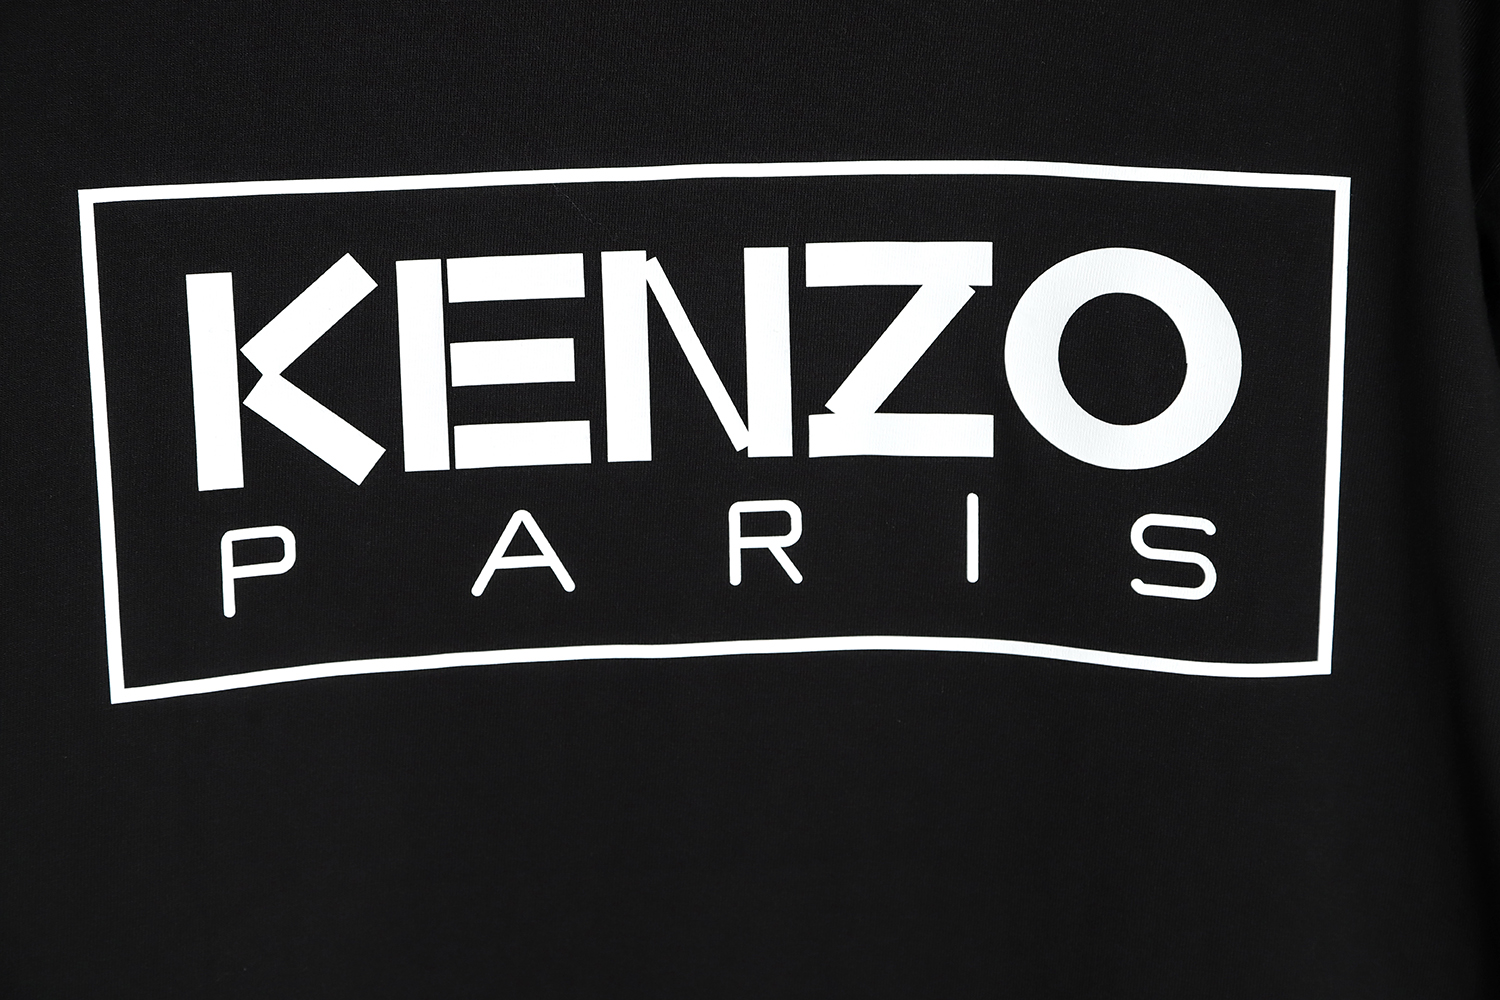 KENZO x NIGO joint block letter print embroidery short-sleeved T-shirt TSK1